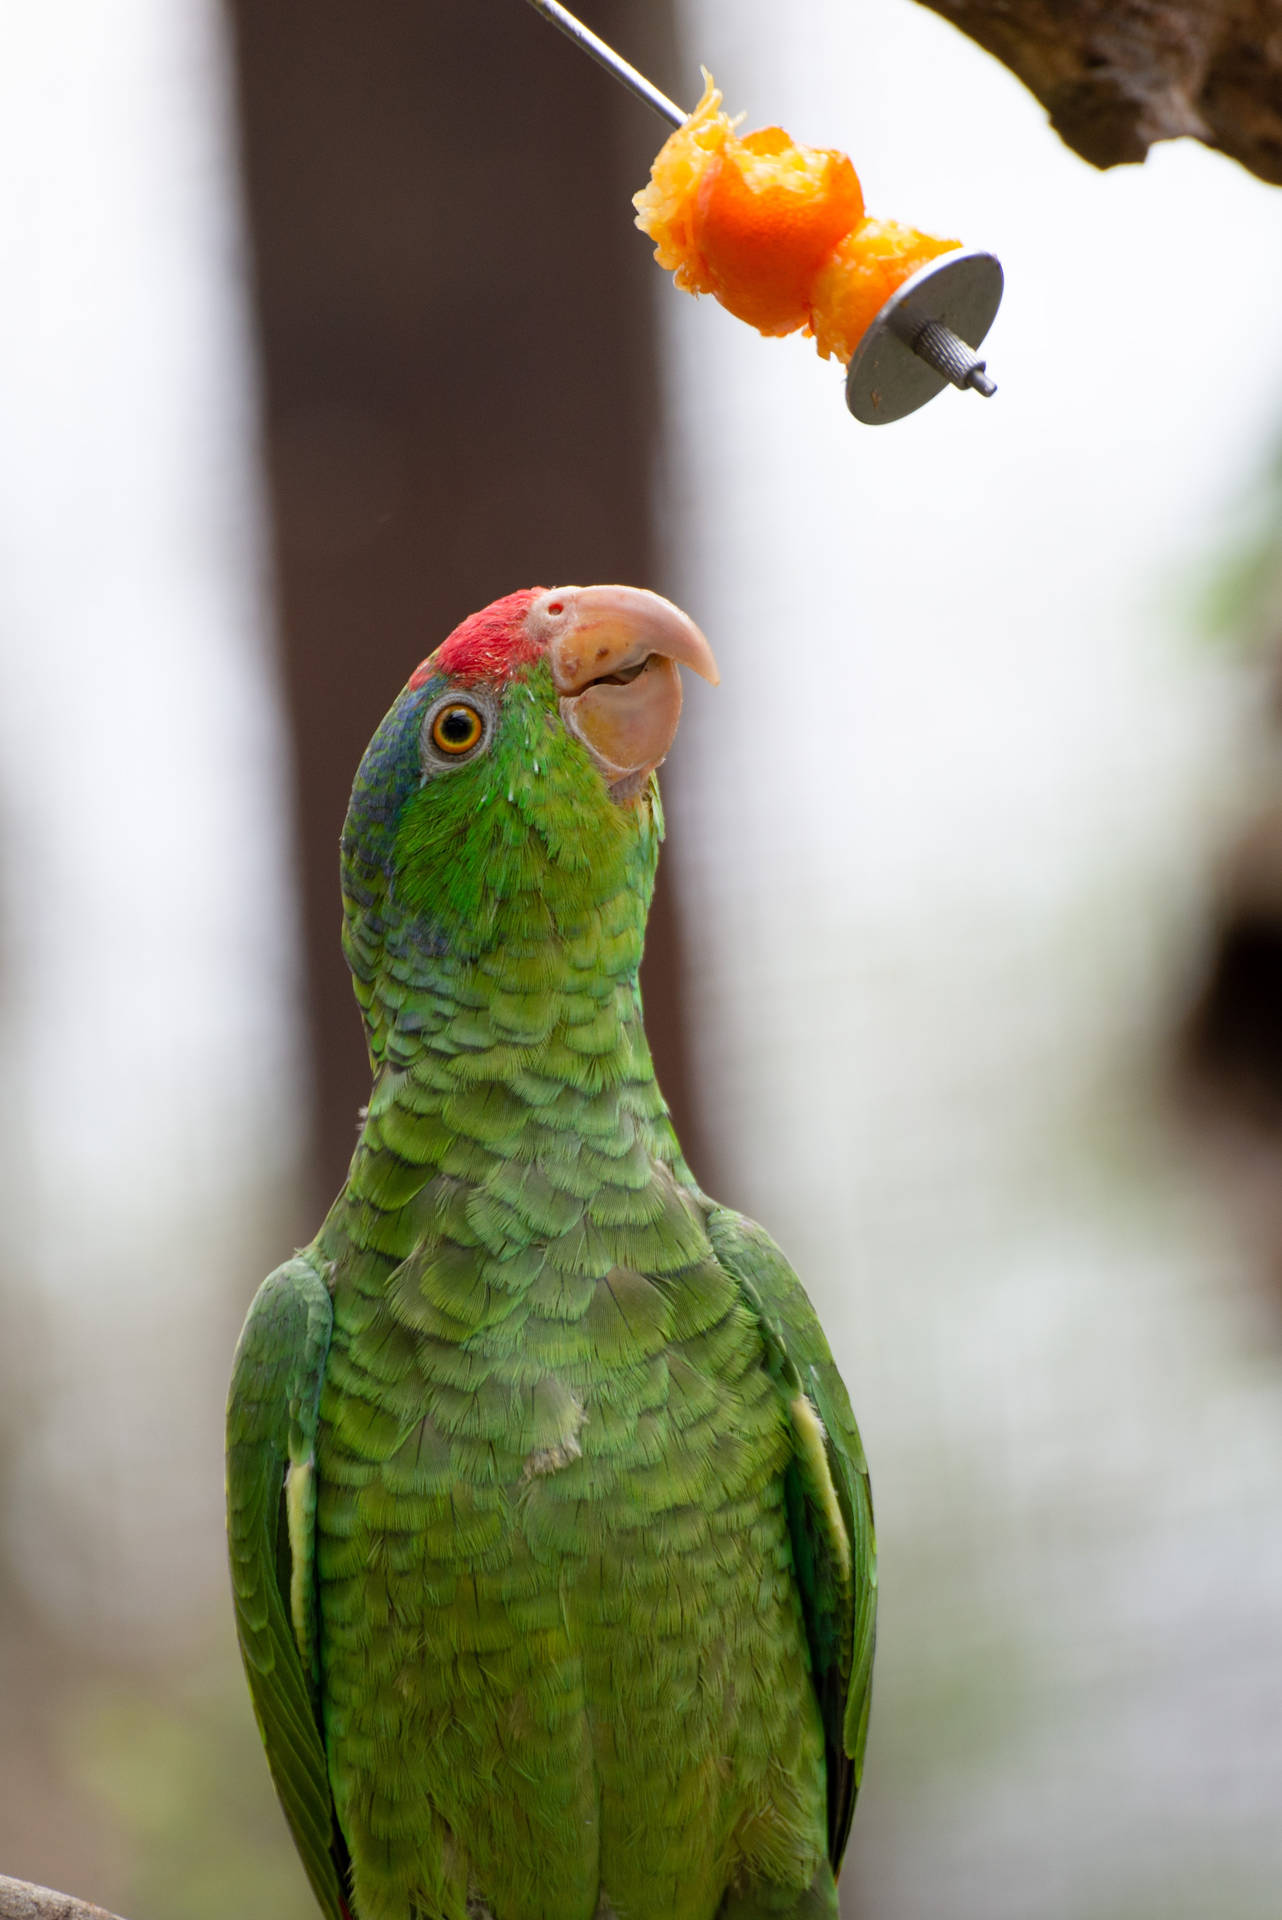 Fruit Feeding Green Parrot Hd